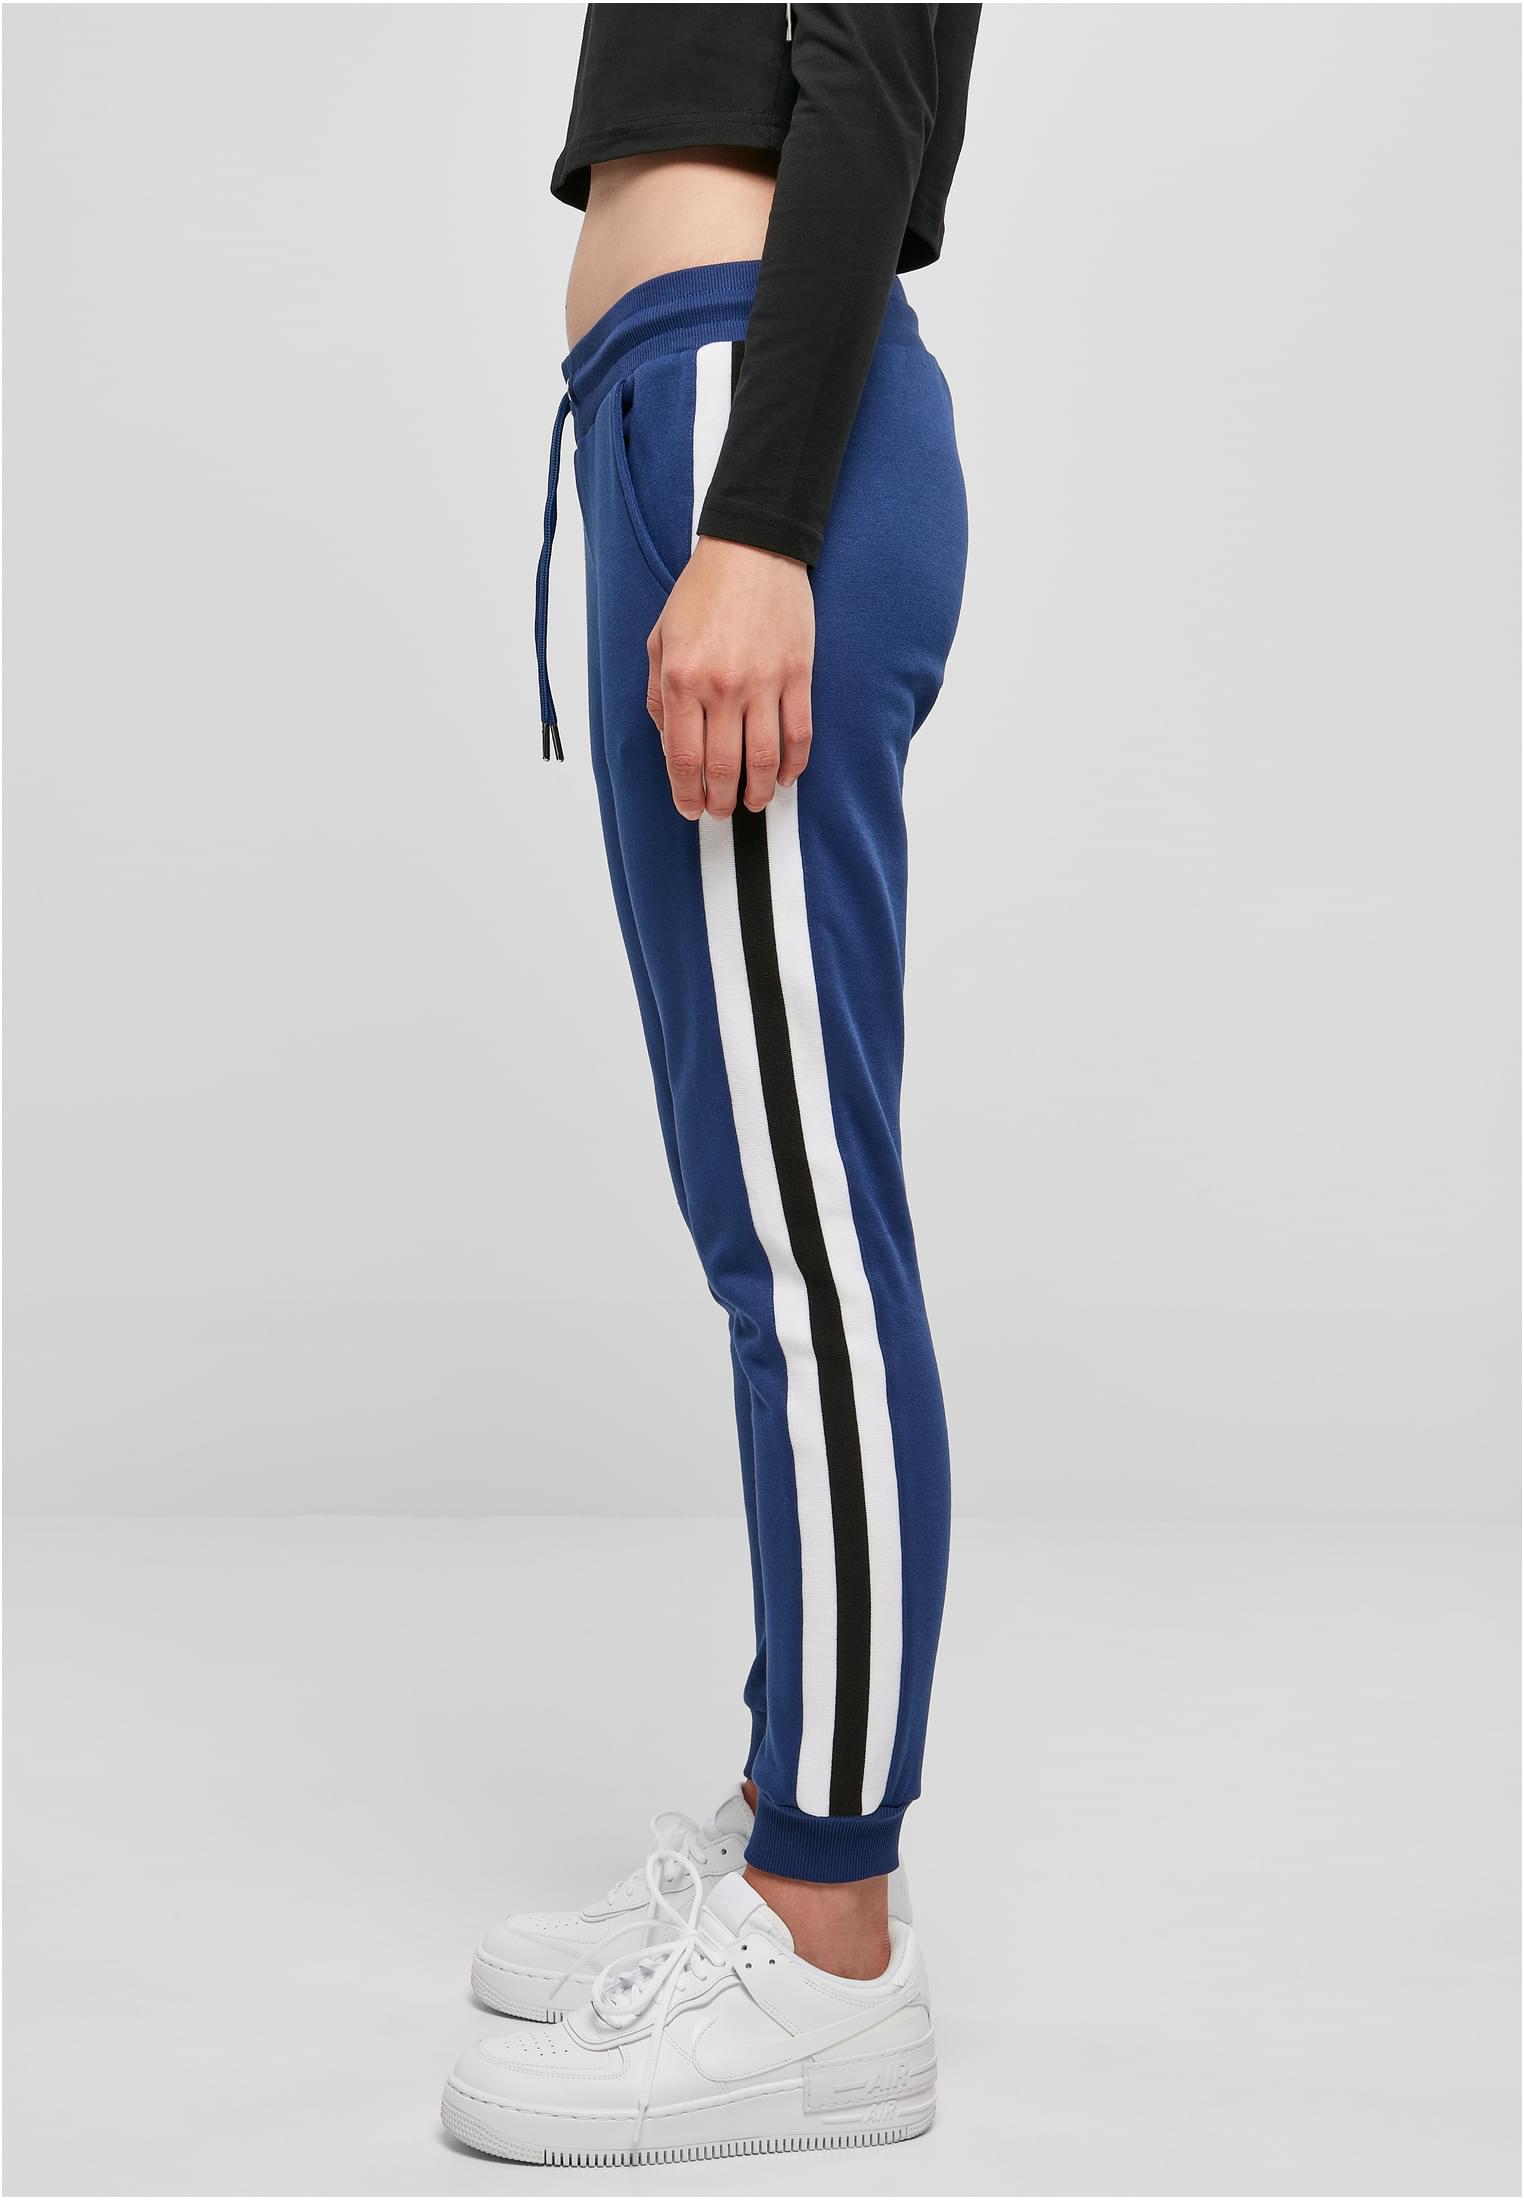 Damen Ladies College Contrast Sweatpants in Farbe spaceblue/white/black